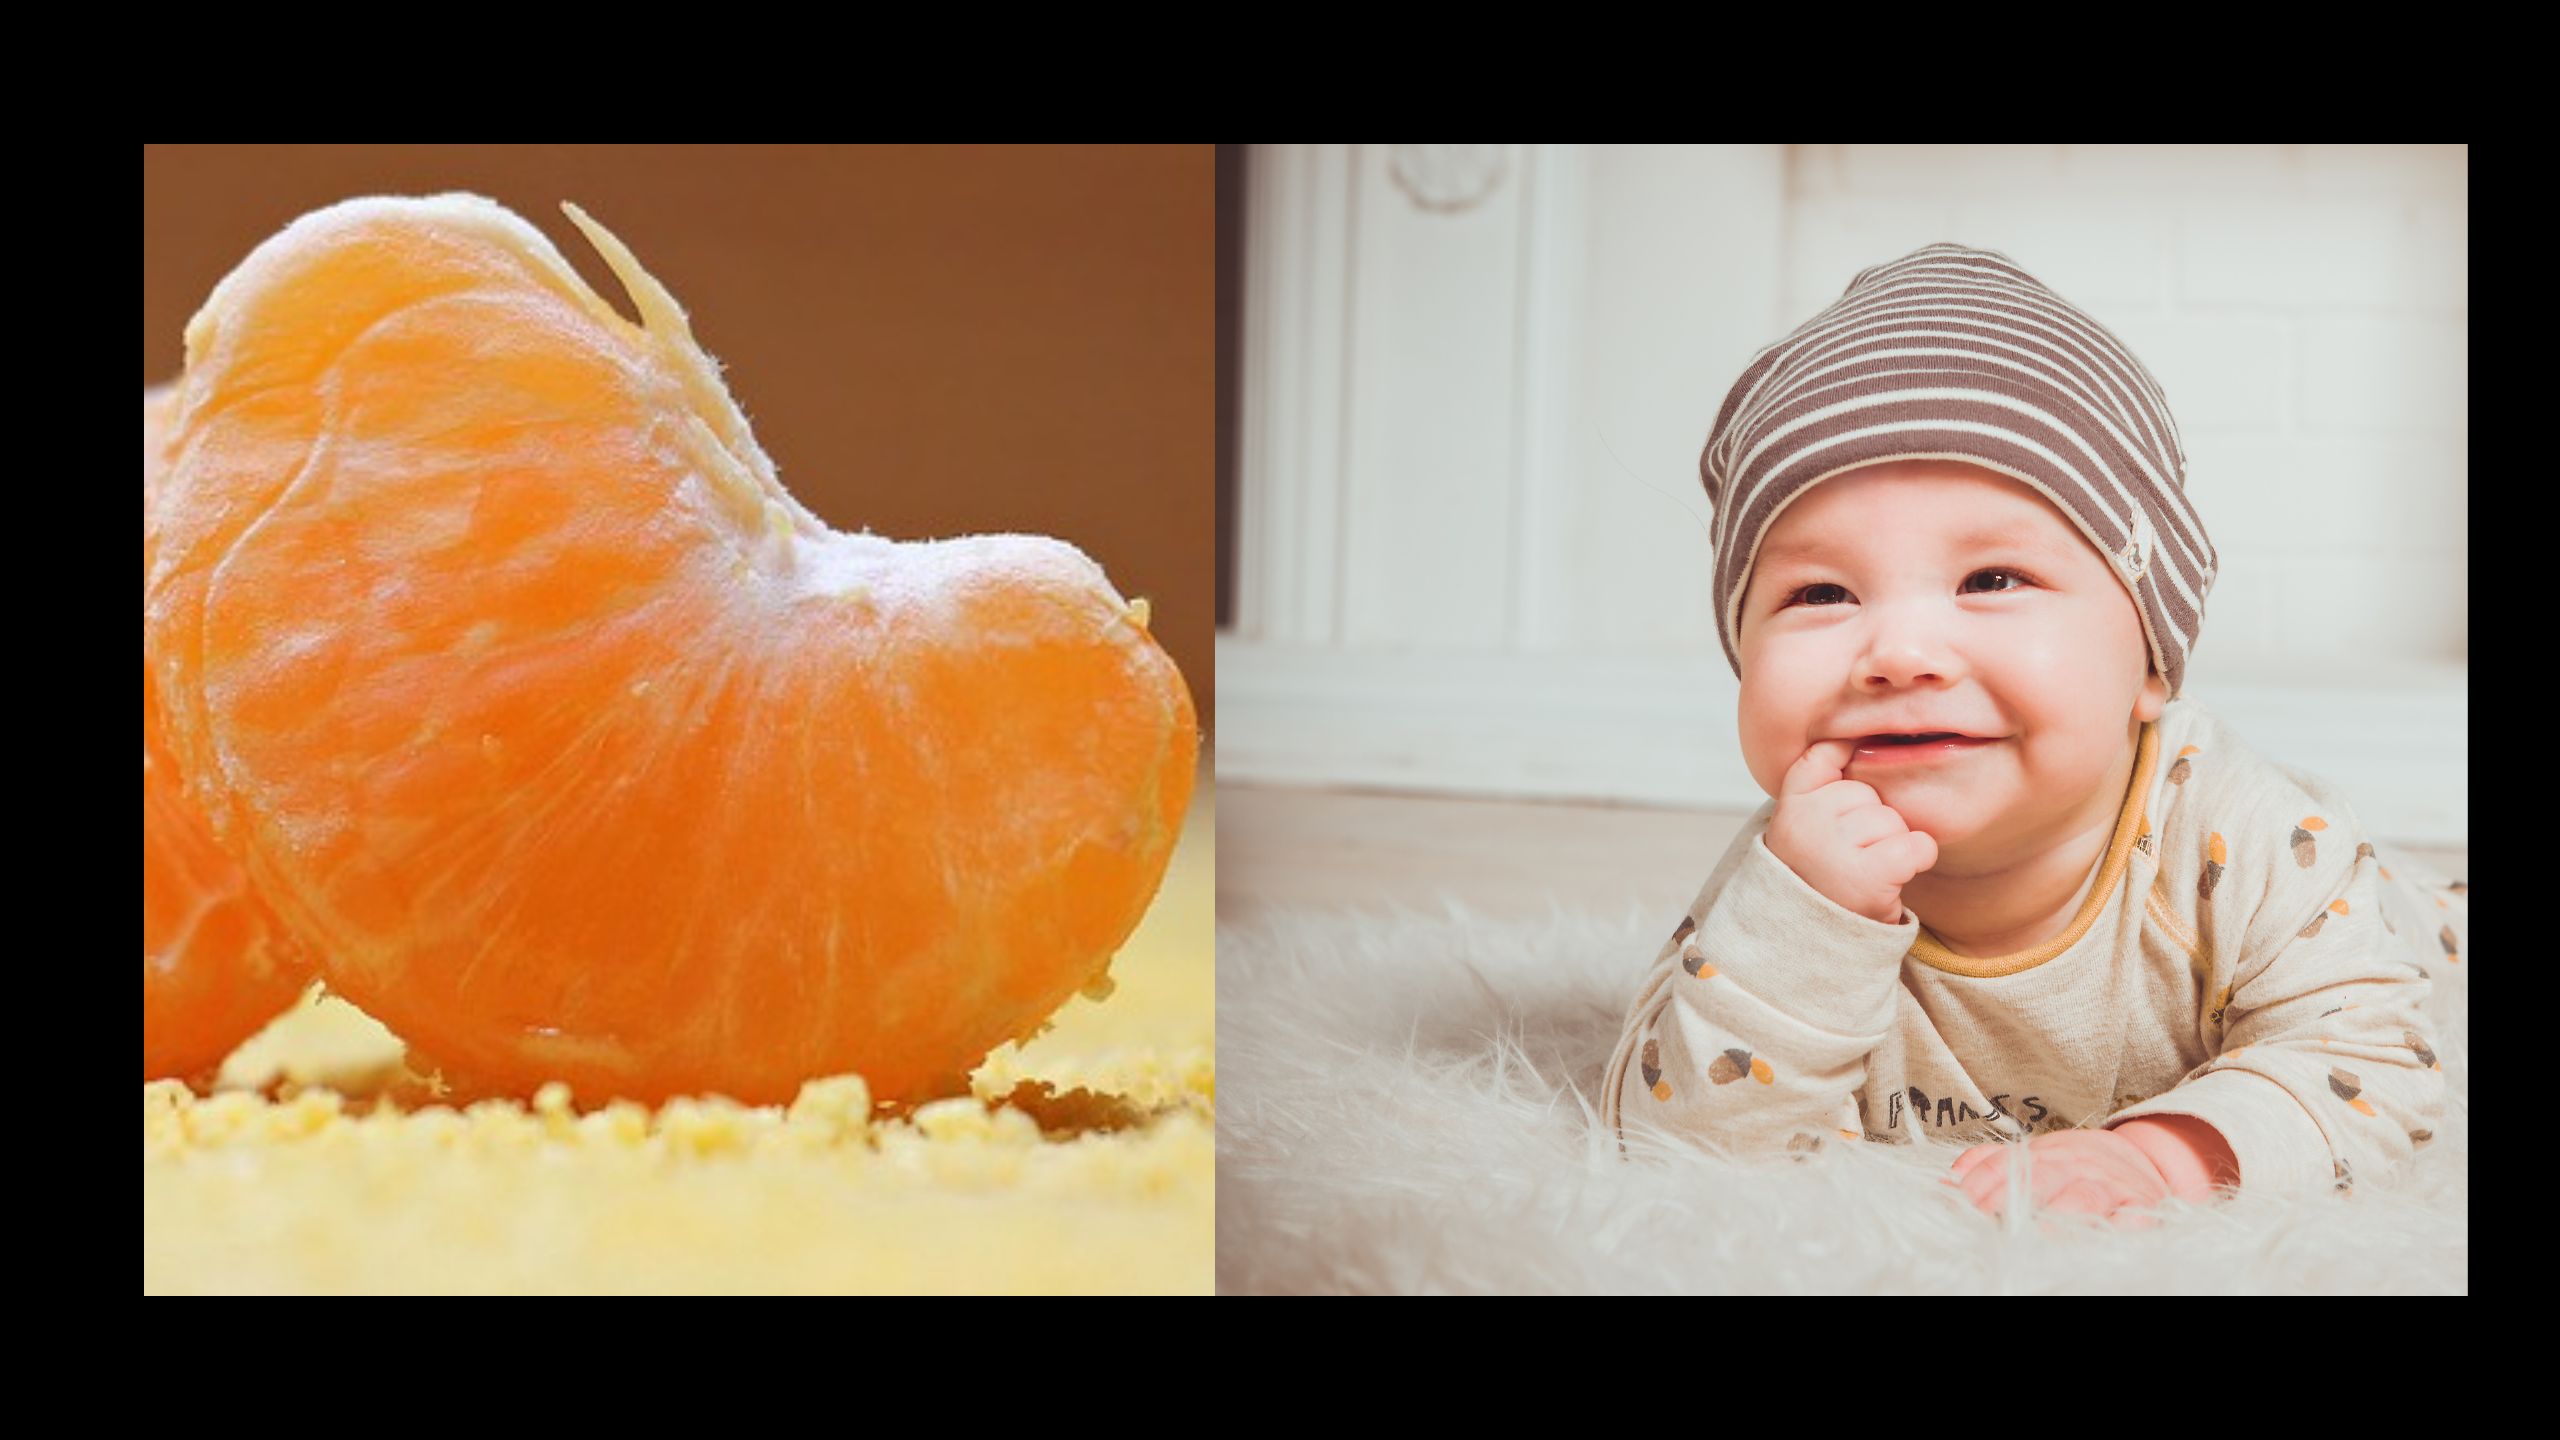 Benefits of orange for babies 